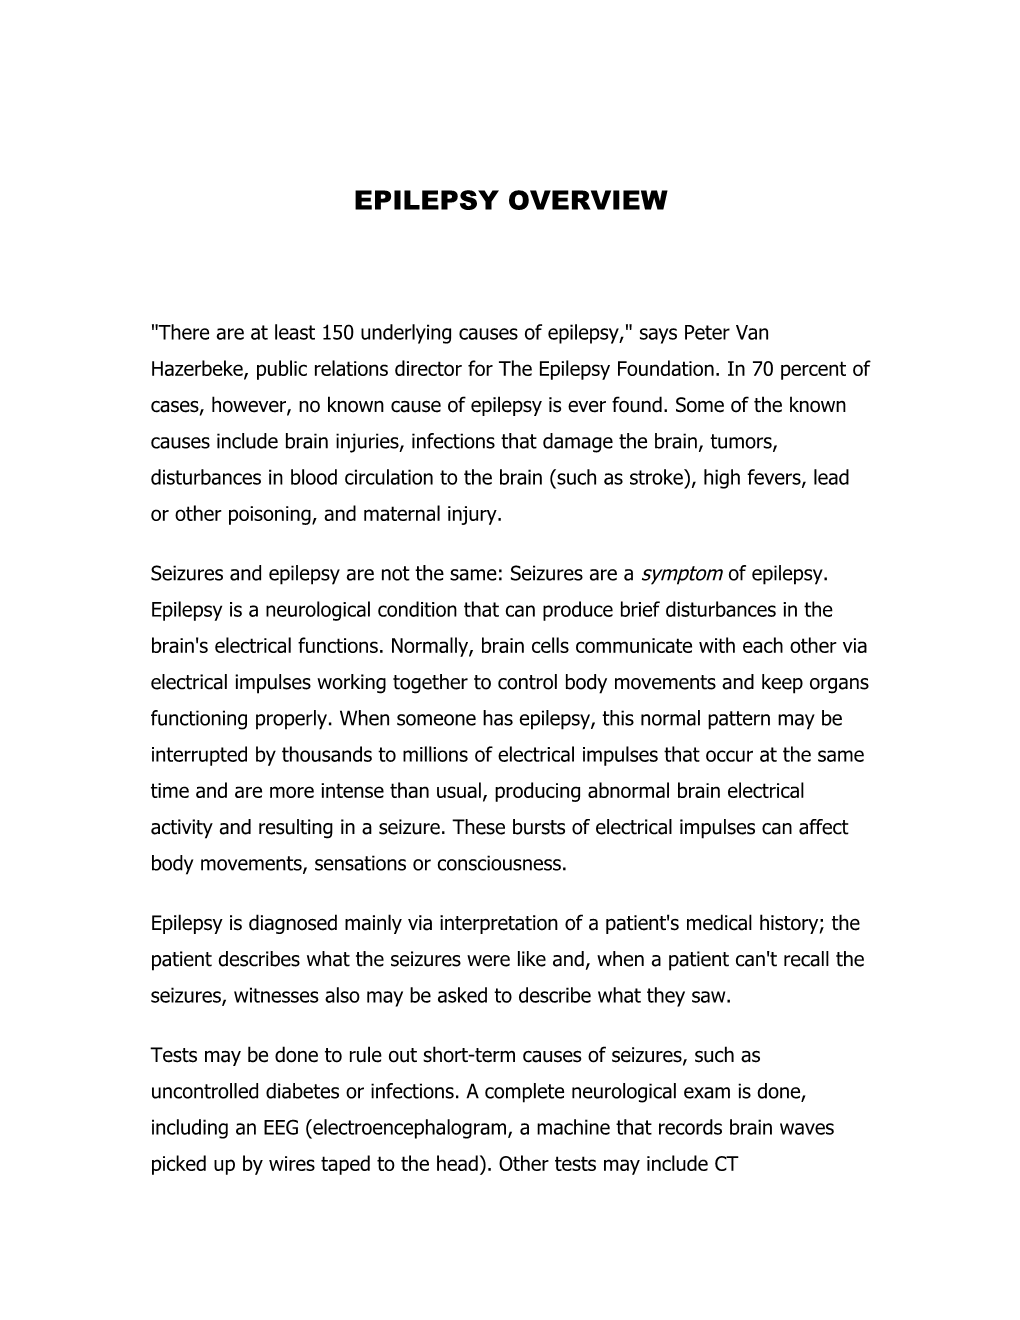 Epilepsy Overview